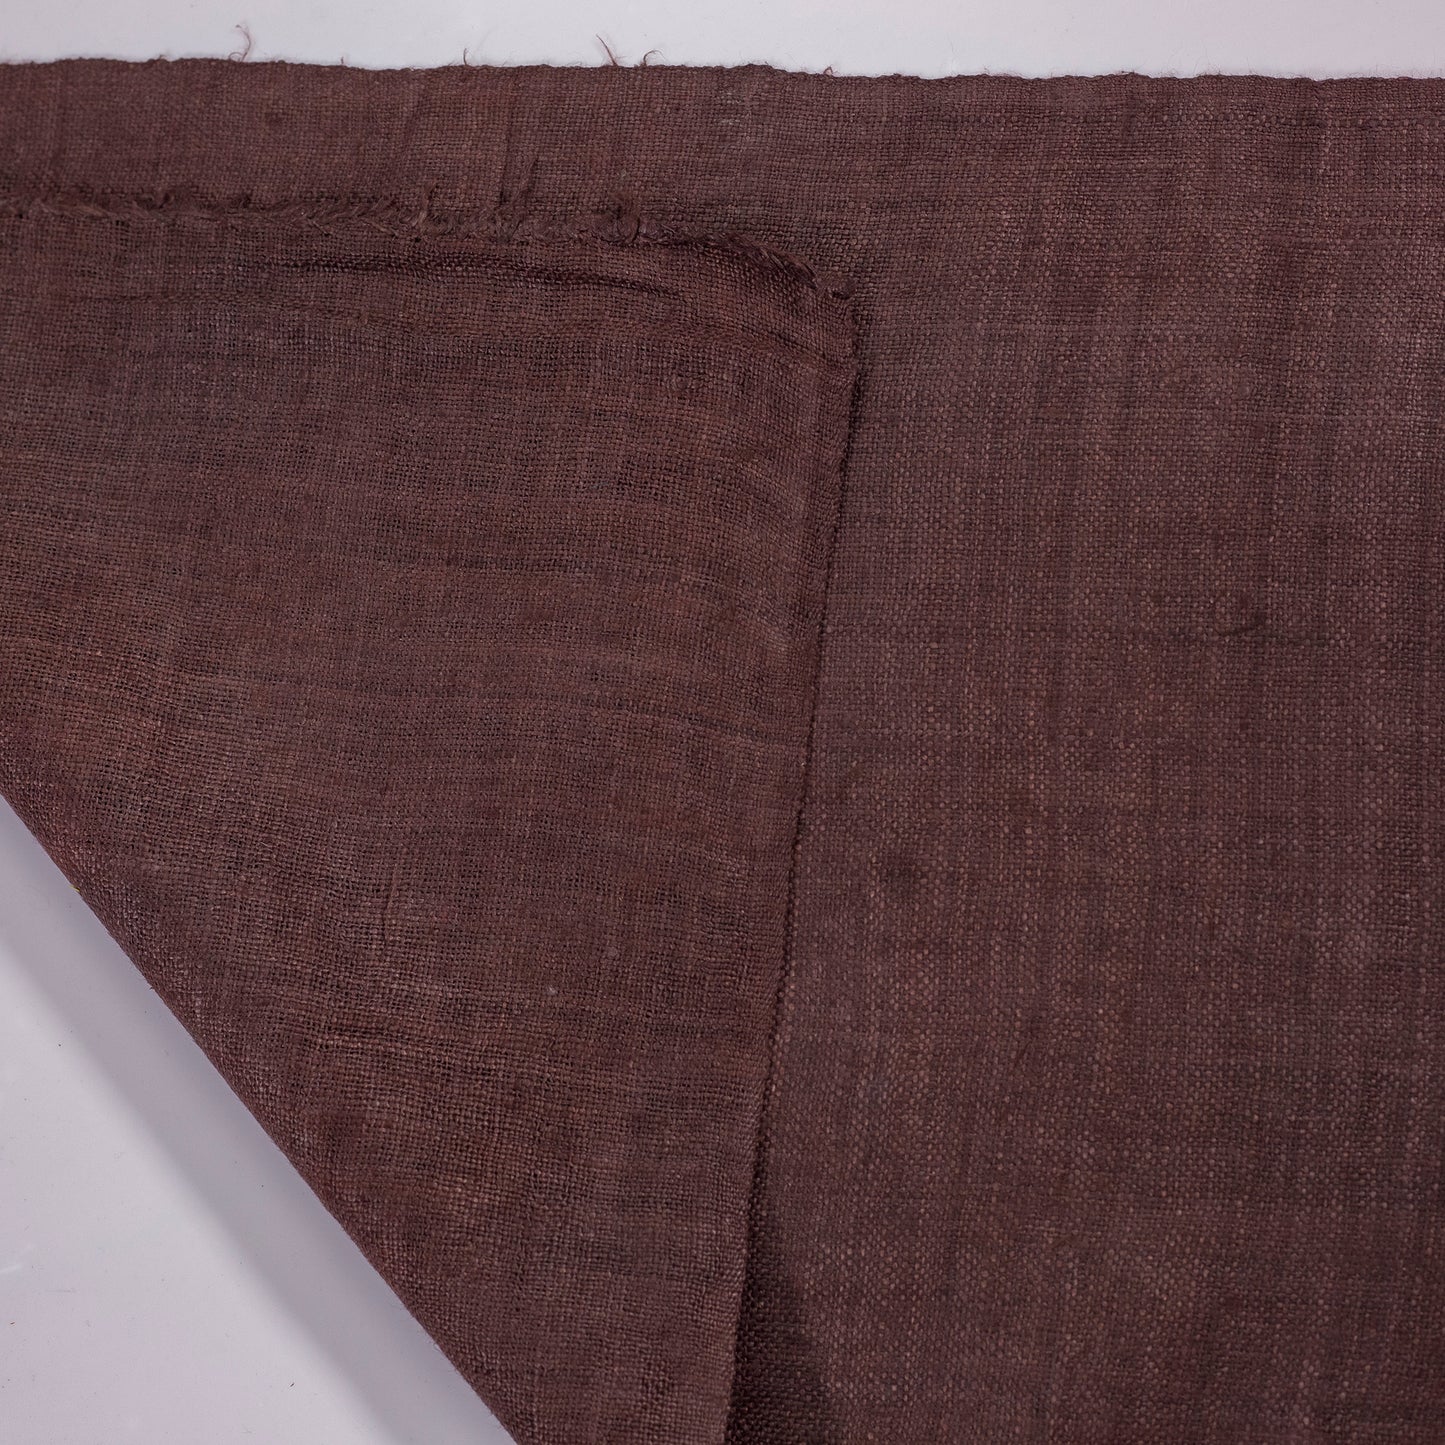 Raw hemp fabric, natural color in DIVINE WINE BROWN